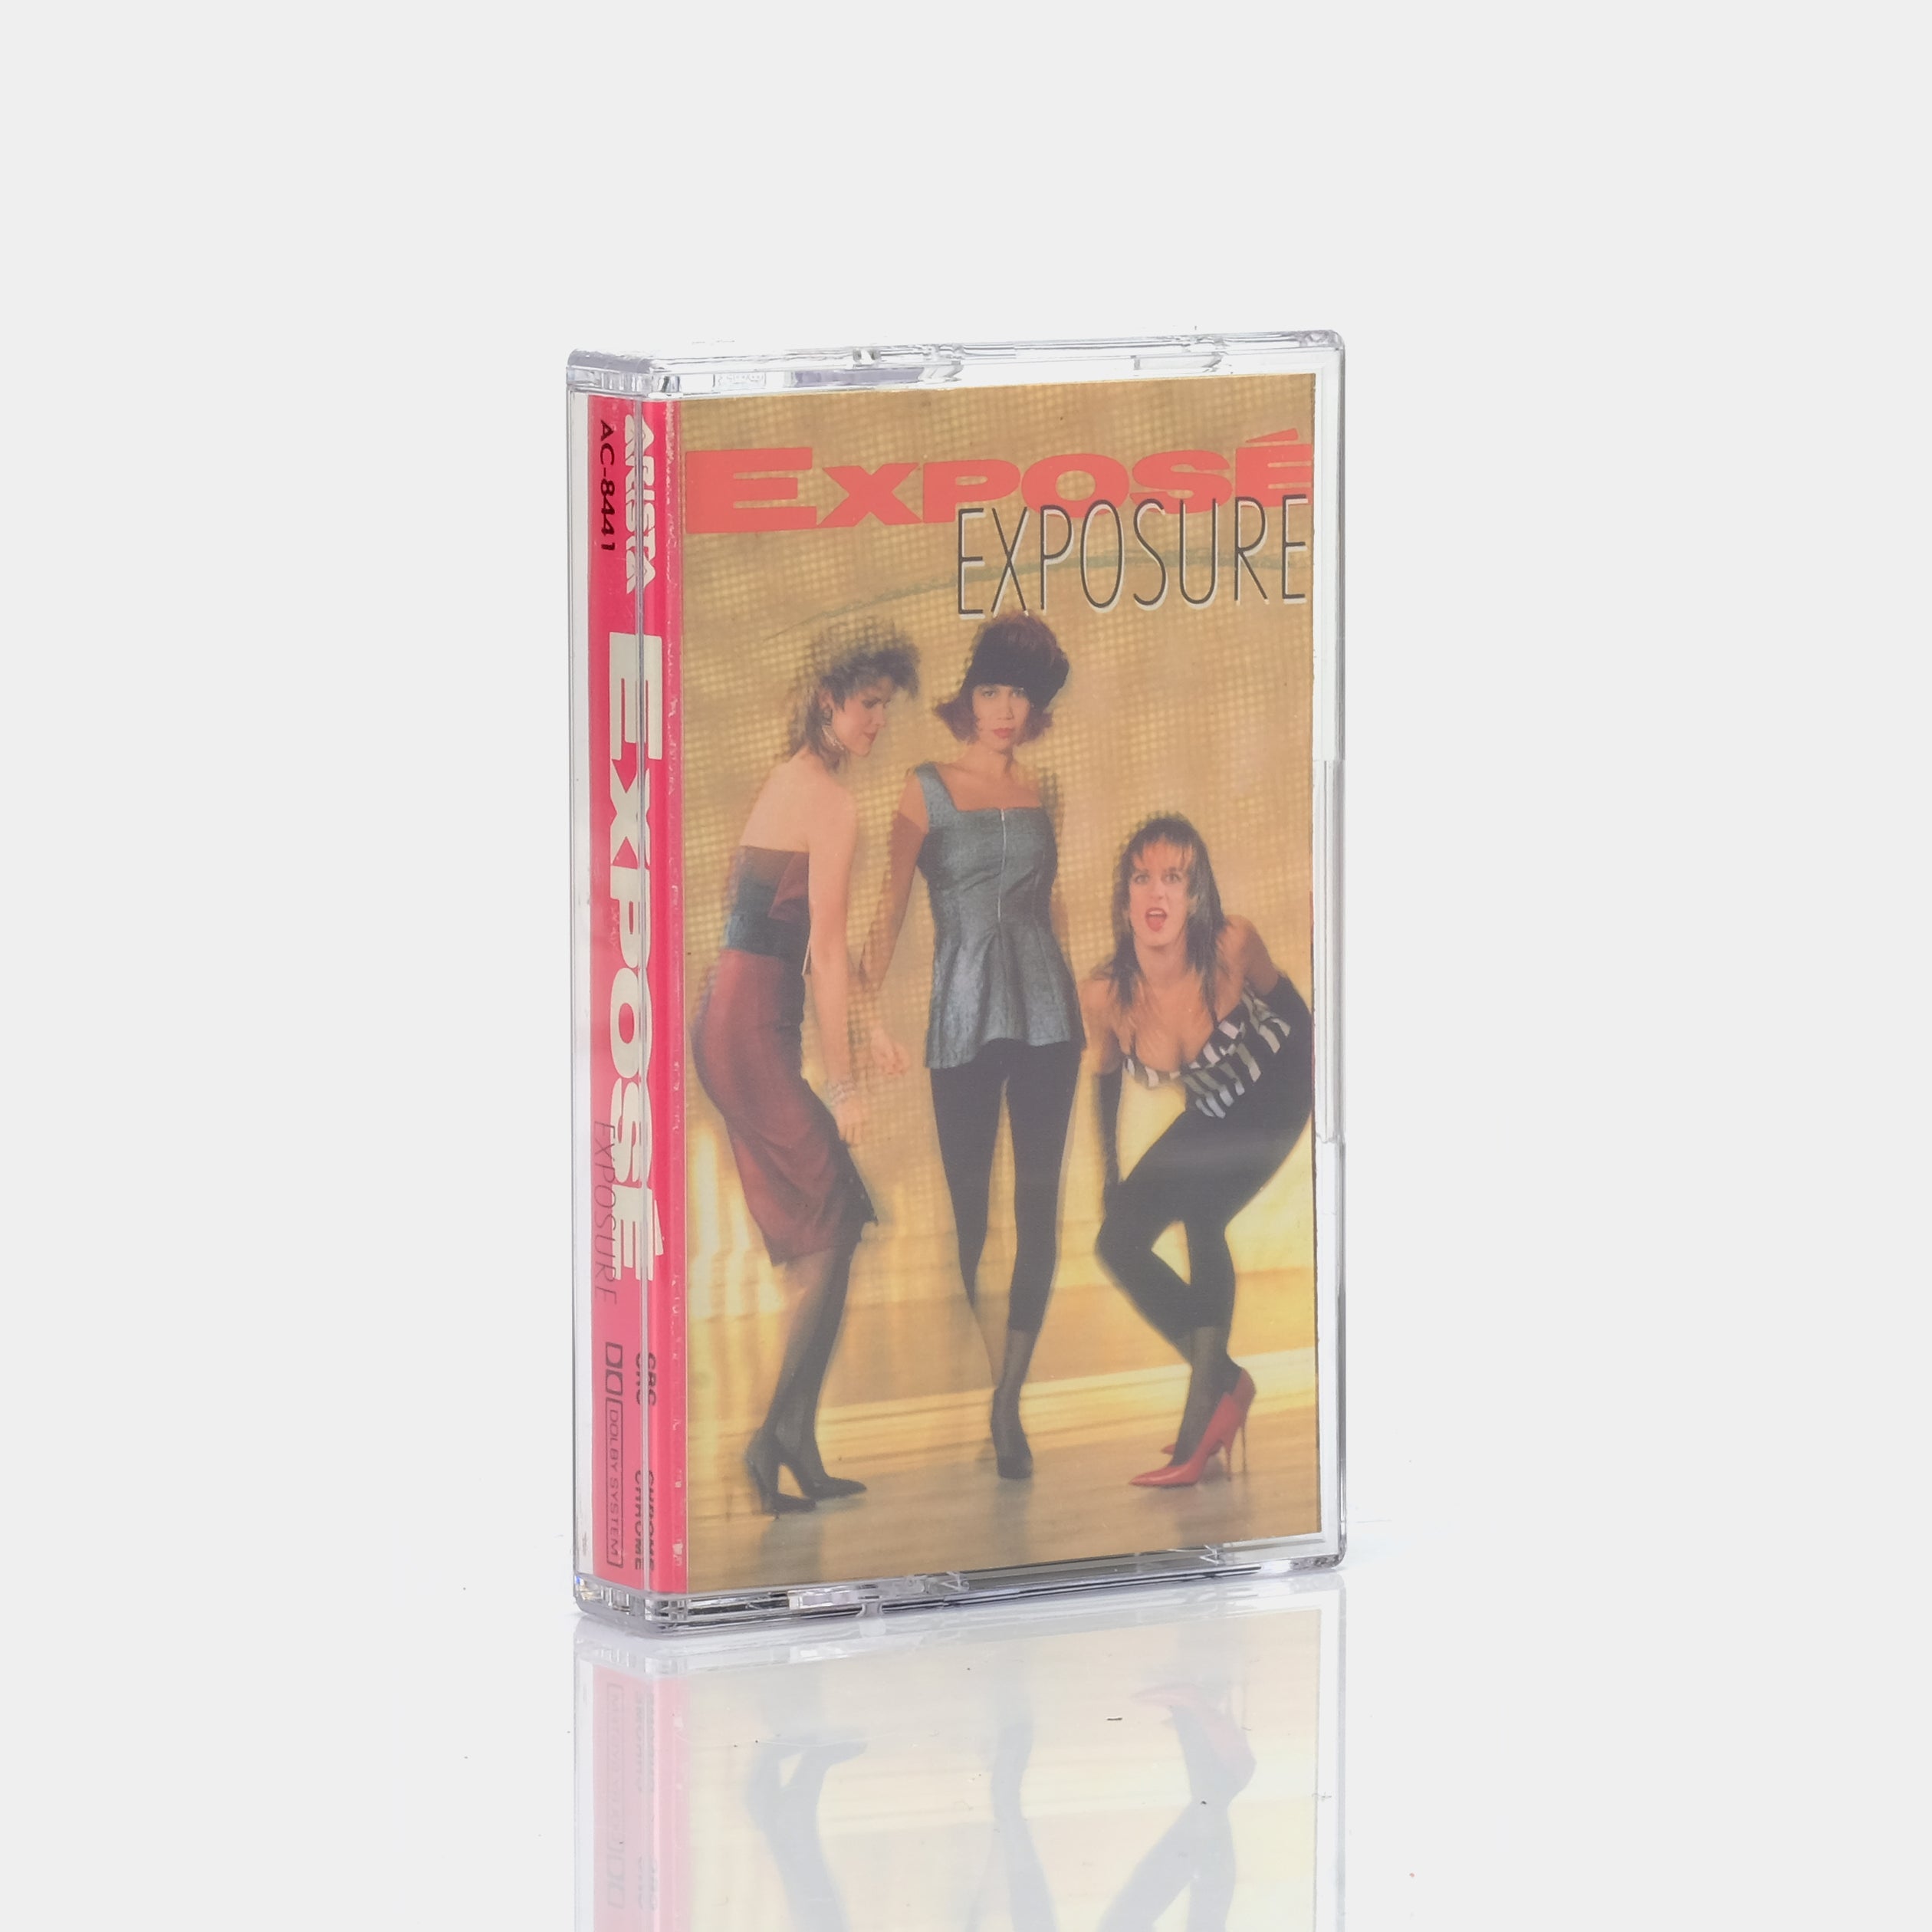 Exposé - Exposure Cassette Tape